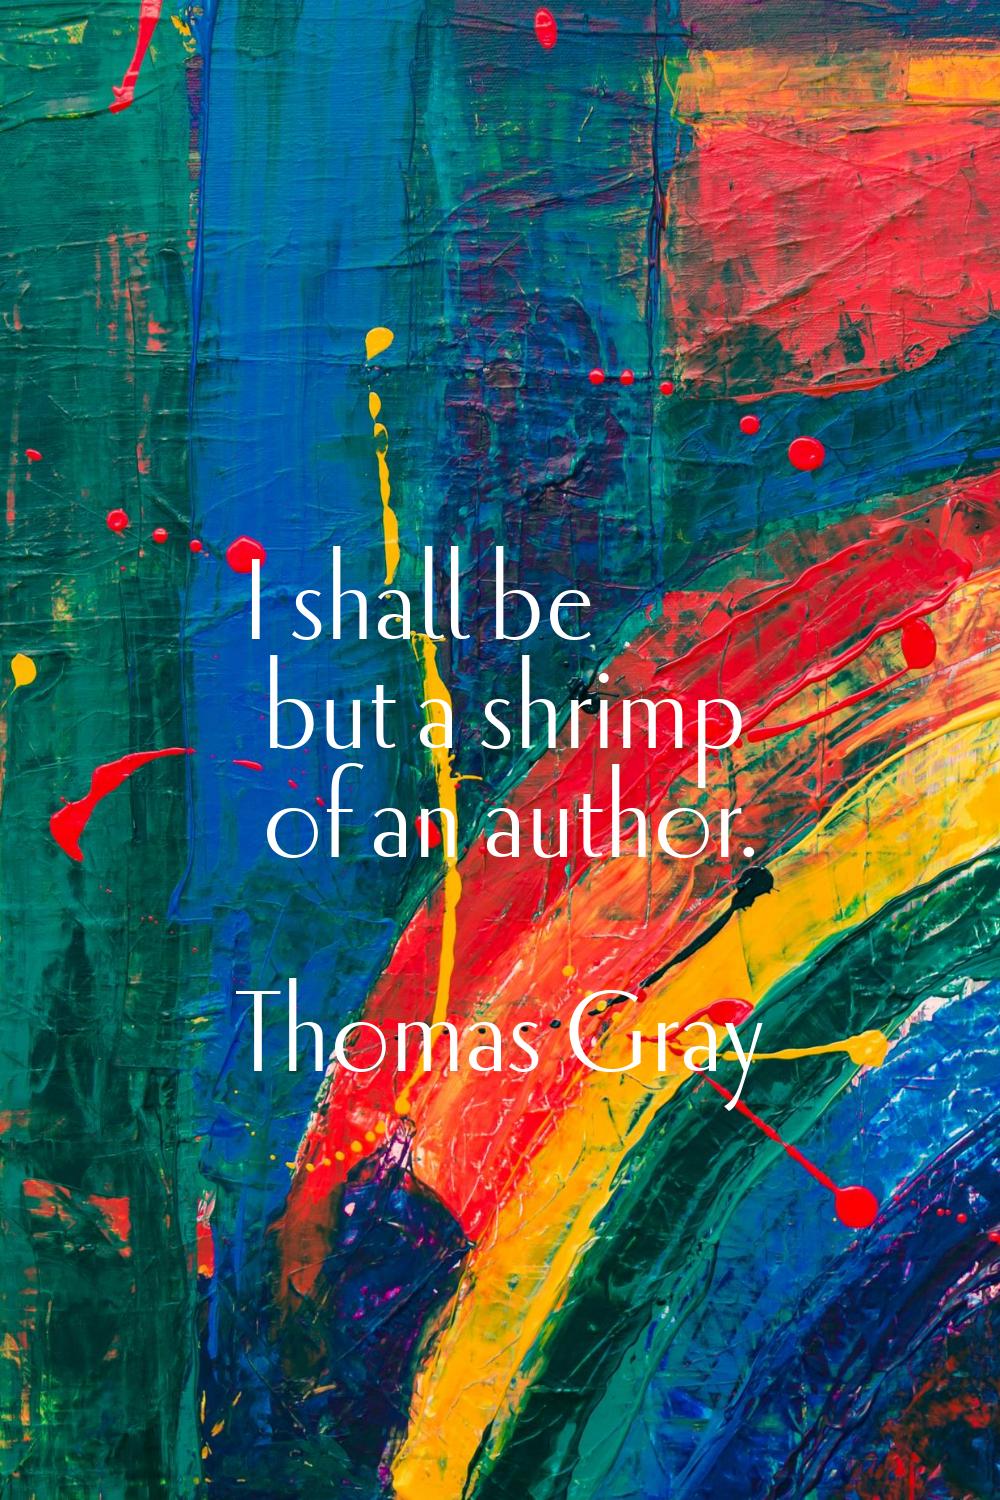 I shall be but a shrimp of an author.